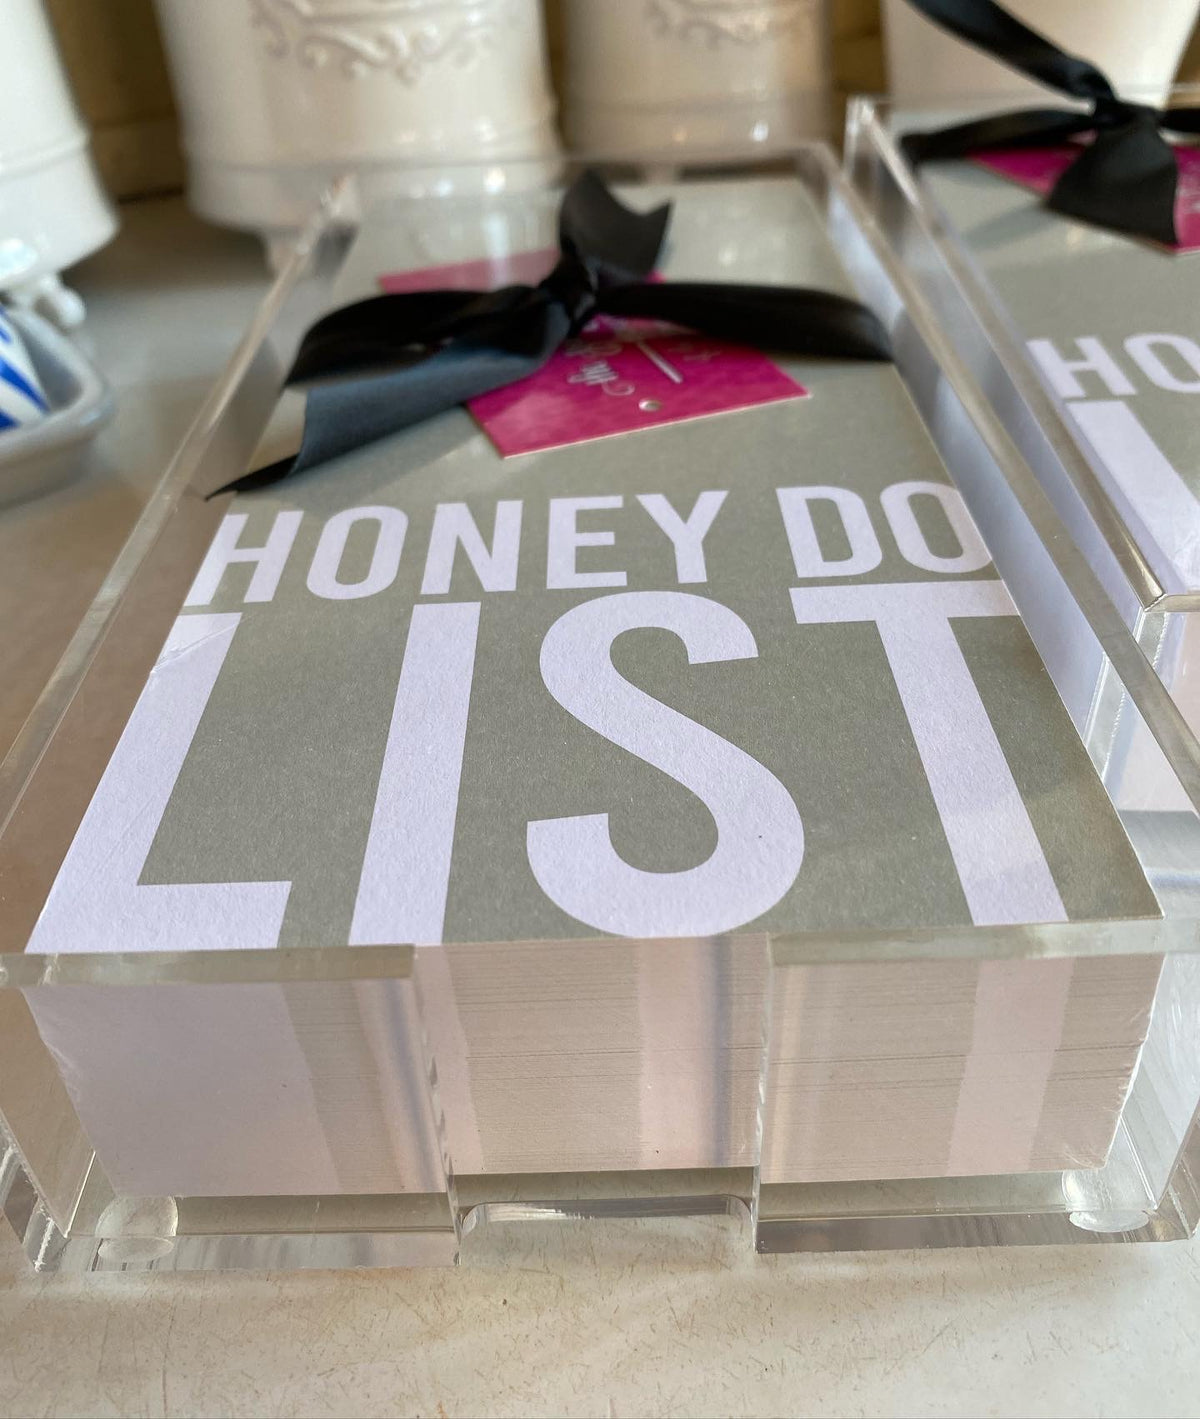 Honey To-Do List - Notepad